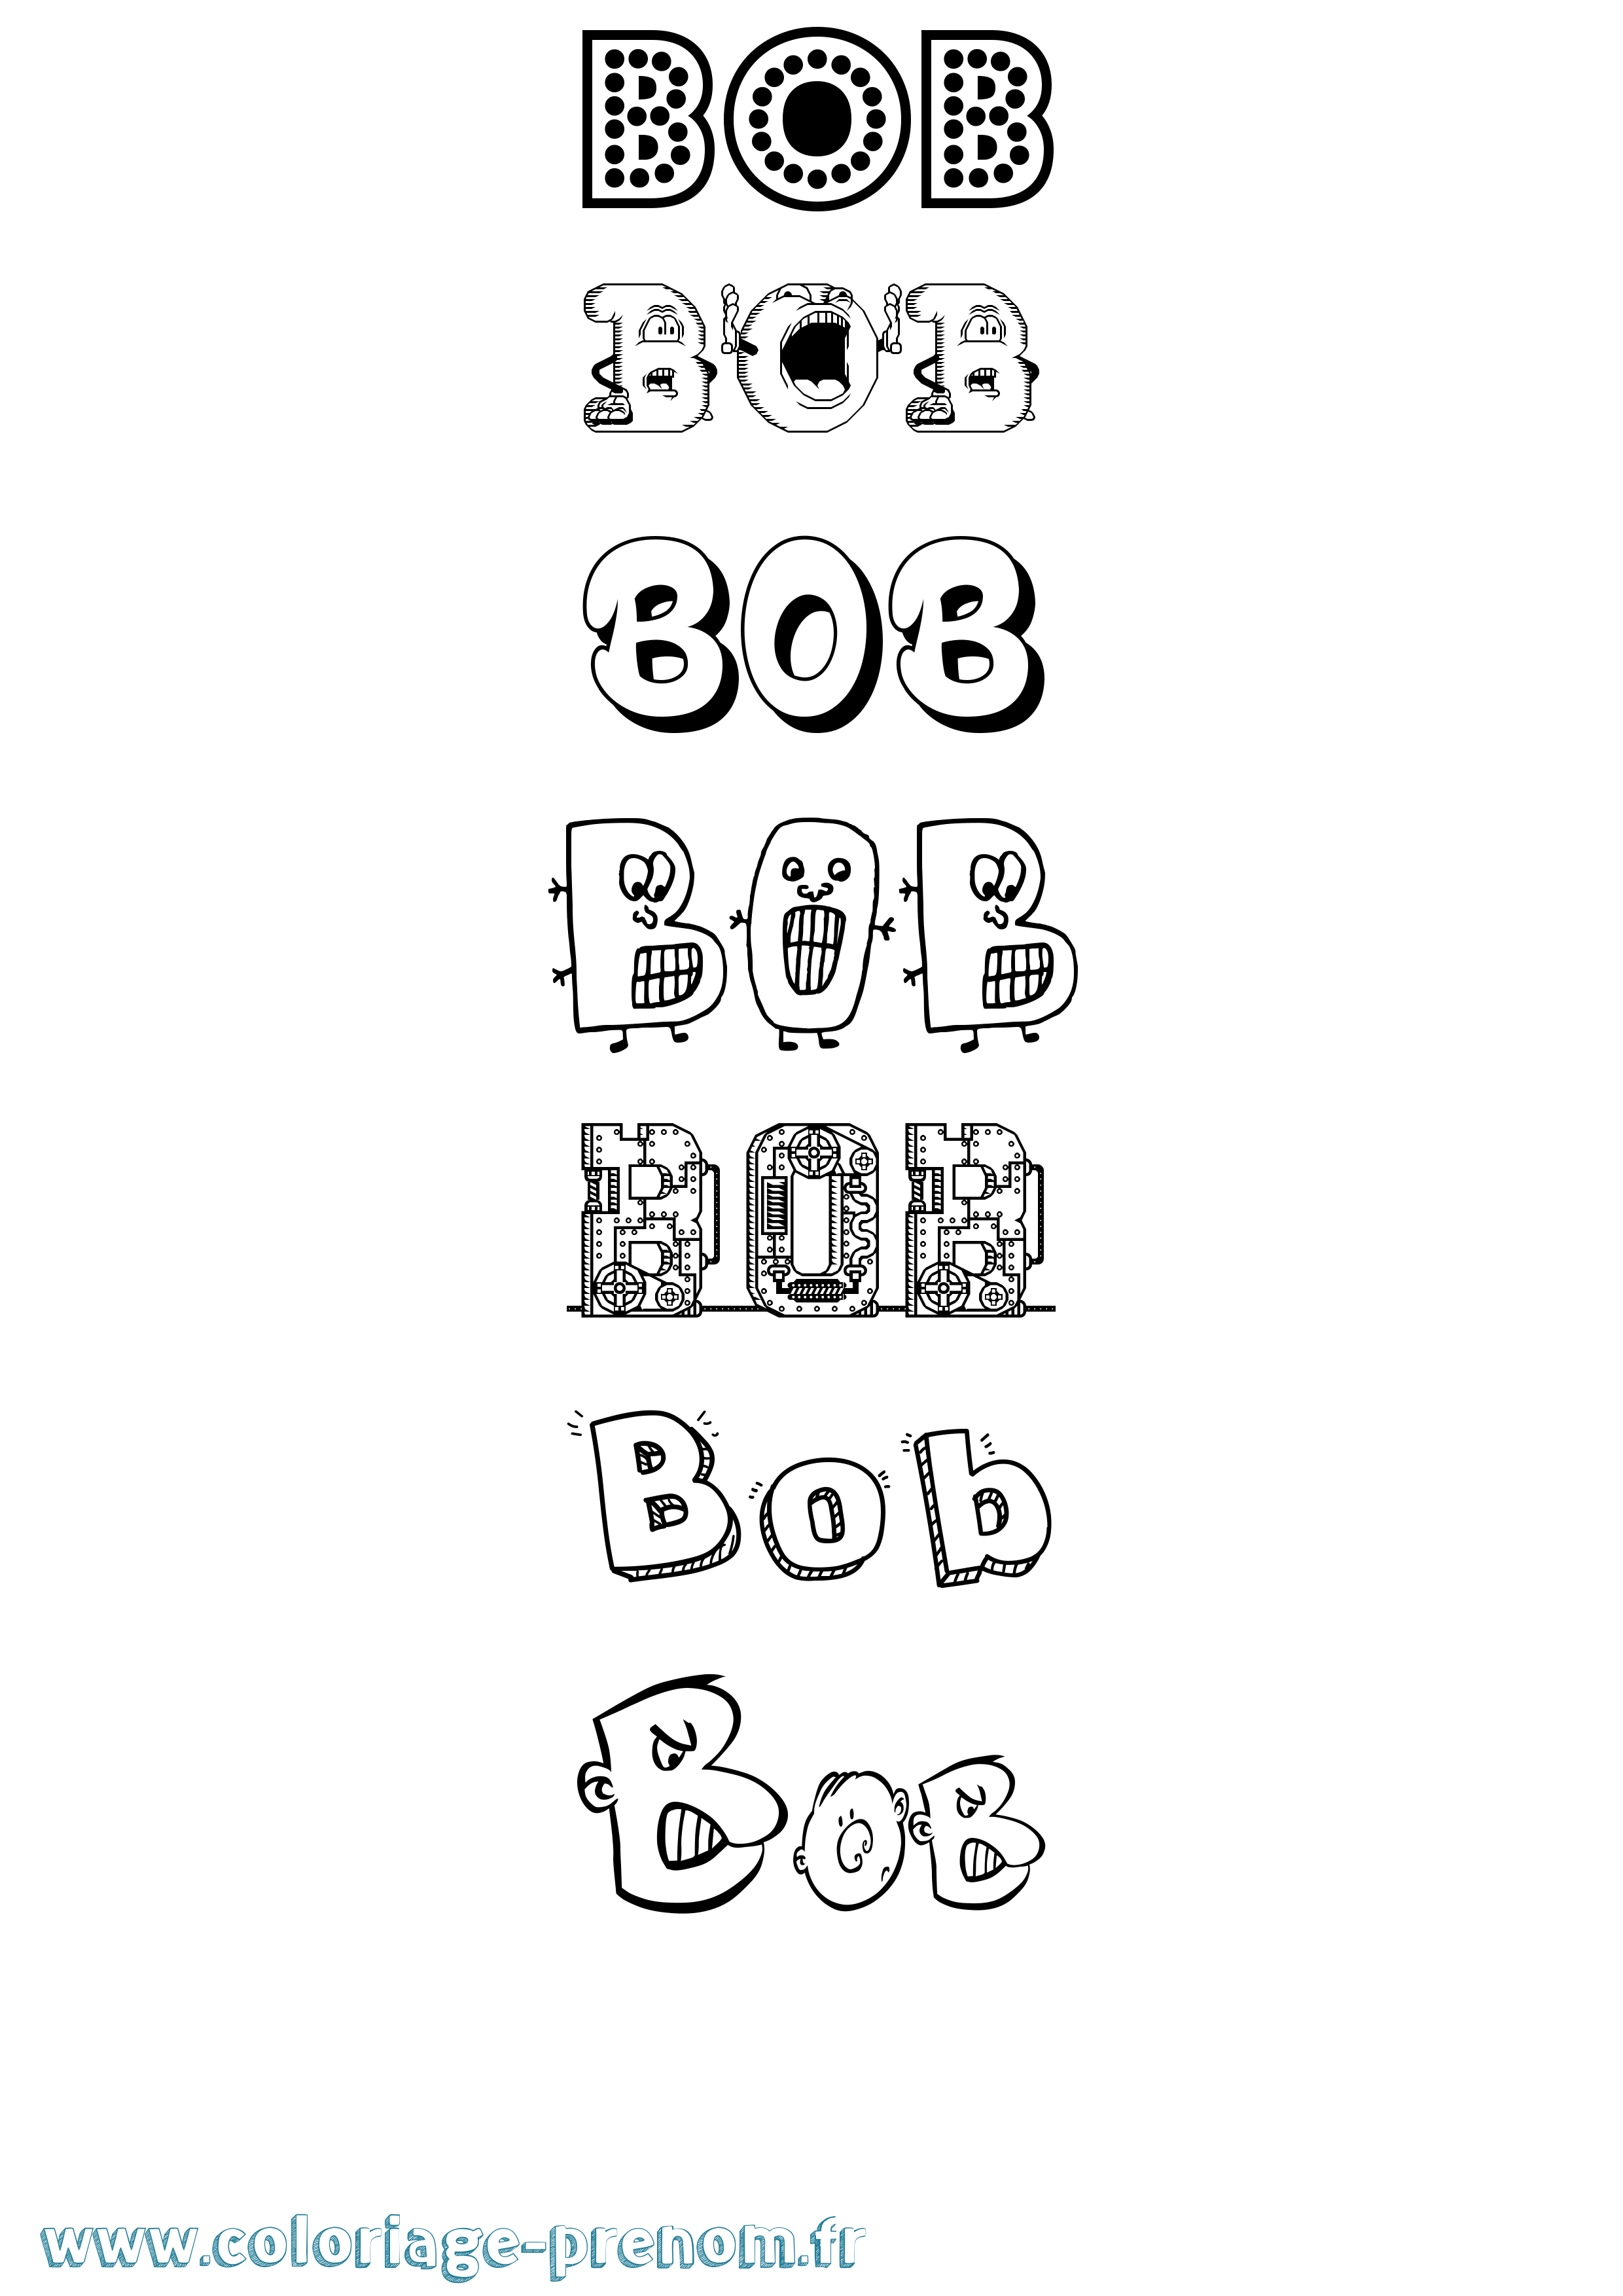 Coloriage prénom Bob Fun